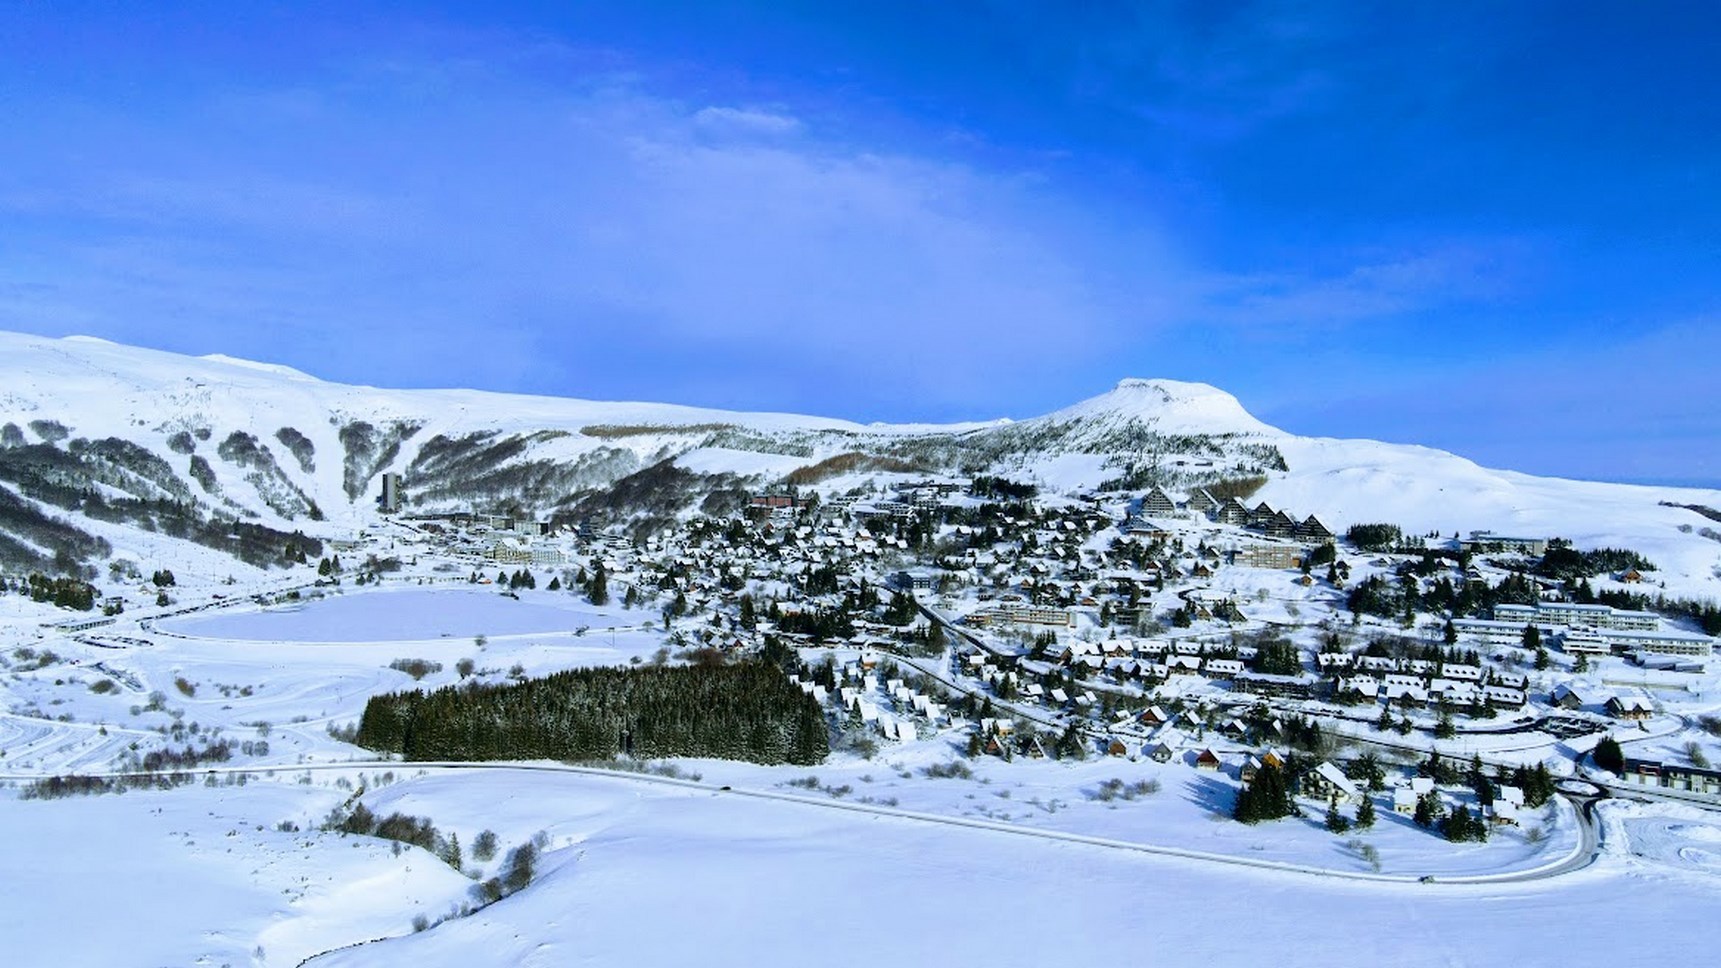 Wide panorama on the ski resort of Super Besse